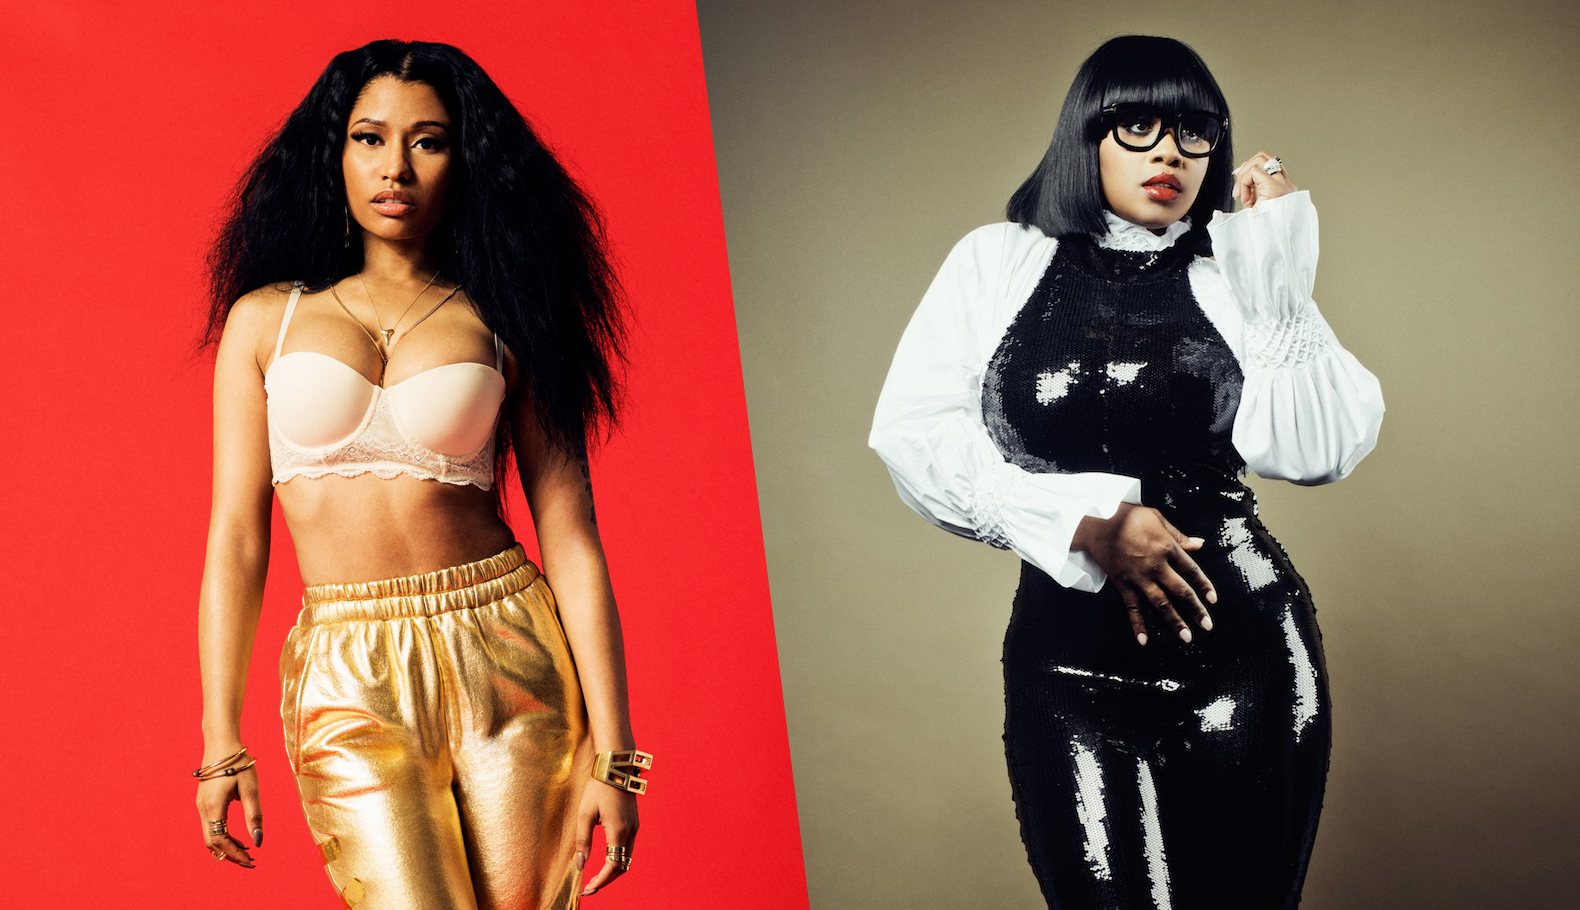  Pelea de gatas: Los maullidos entre Nicki Minaj y Remy Ma (who?) se recrudecen